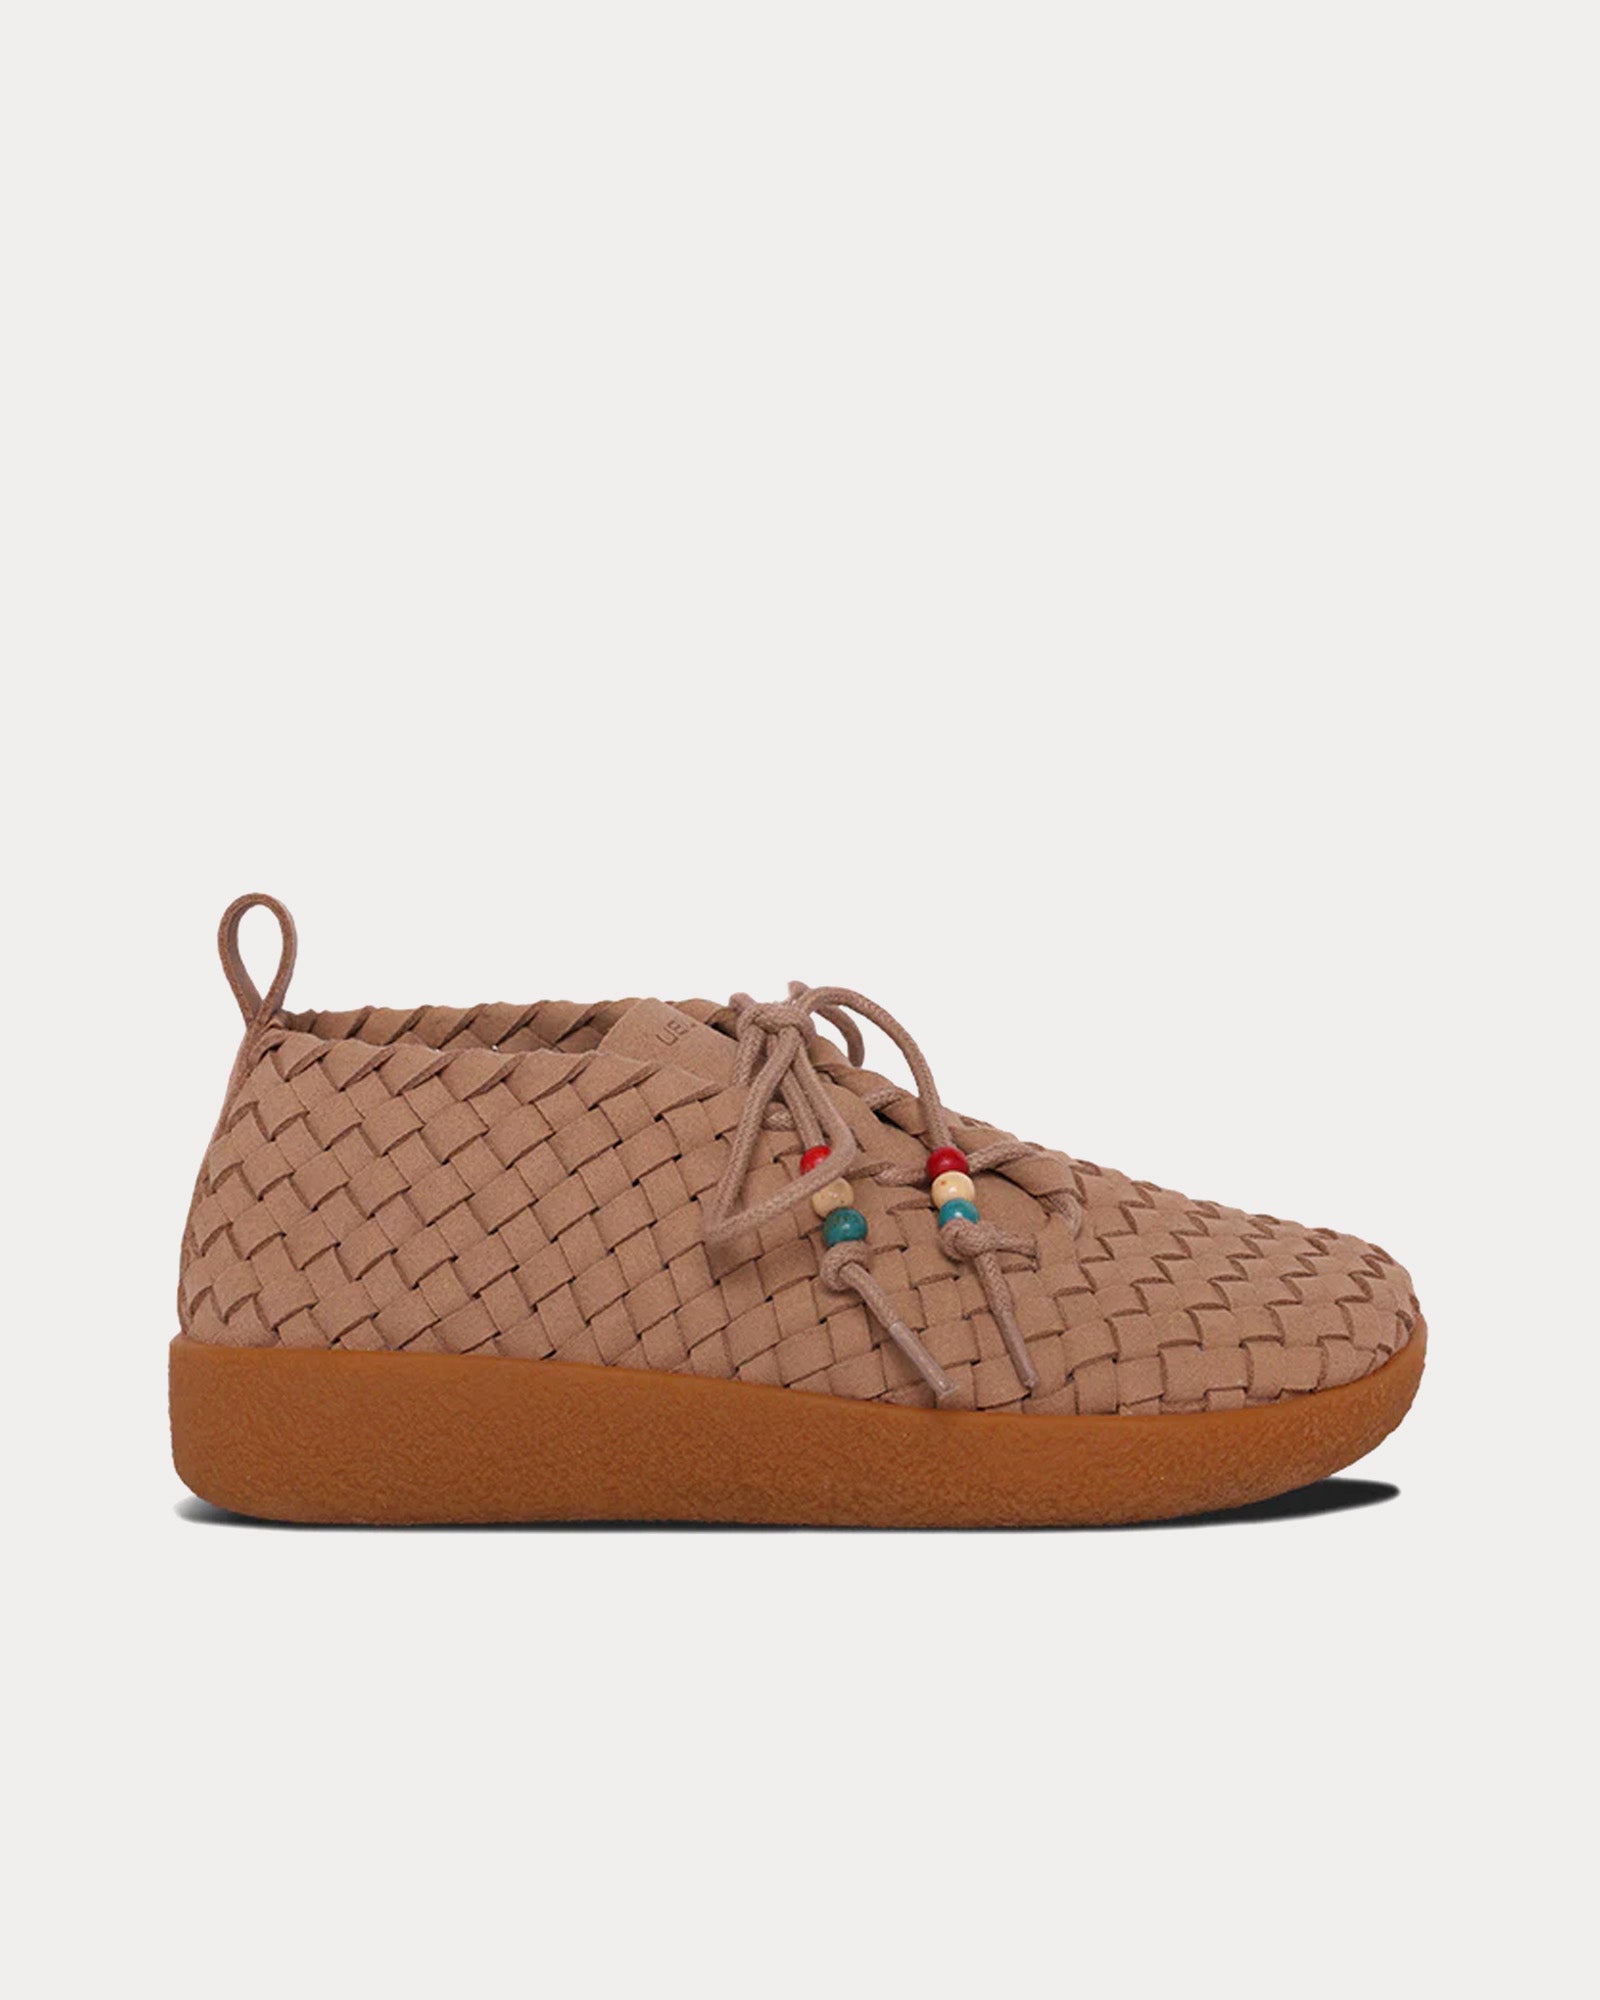 Malibu Sandals - Matador Chukka Vegan Leather Beige / Tan Low Top Sneakers